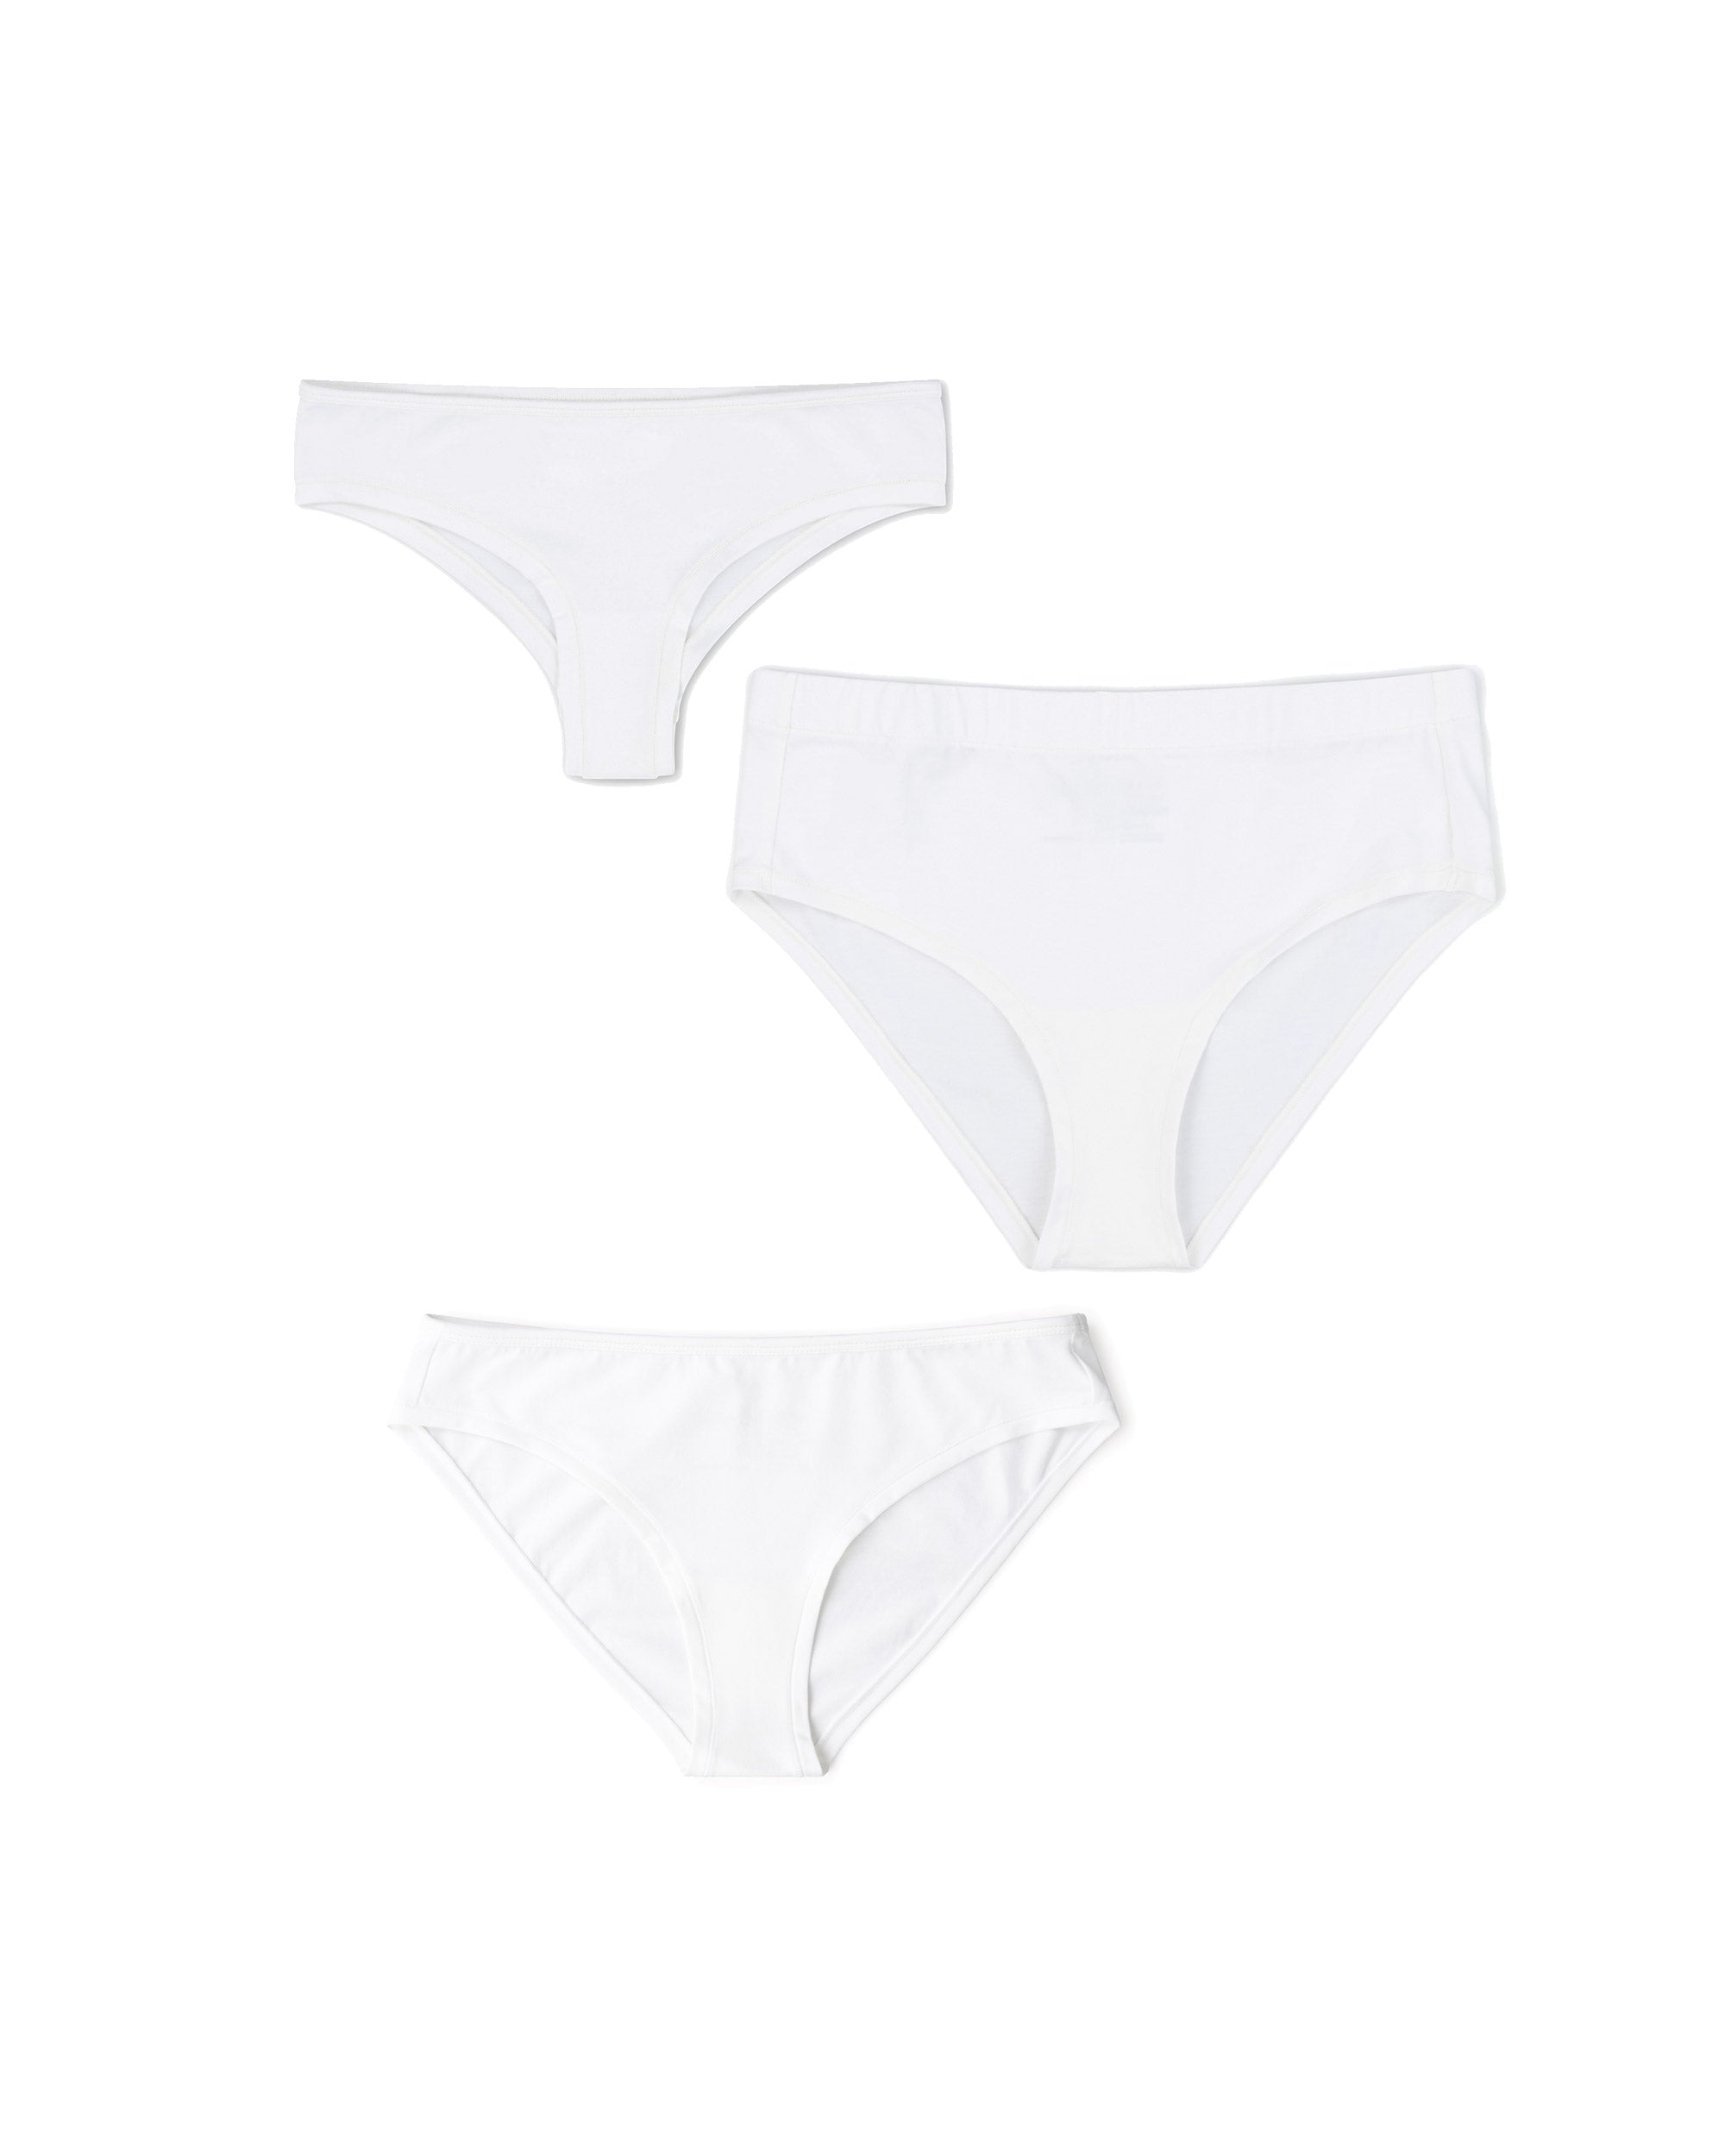 White Airtex Briefs 100% Cotton Eyelet Full Knickers Underwear Pants -  White, OS (UK 14-16)